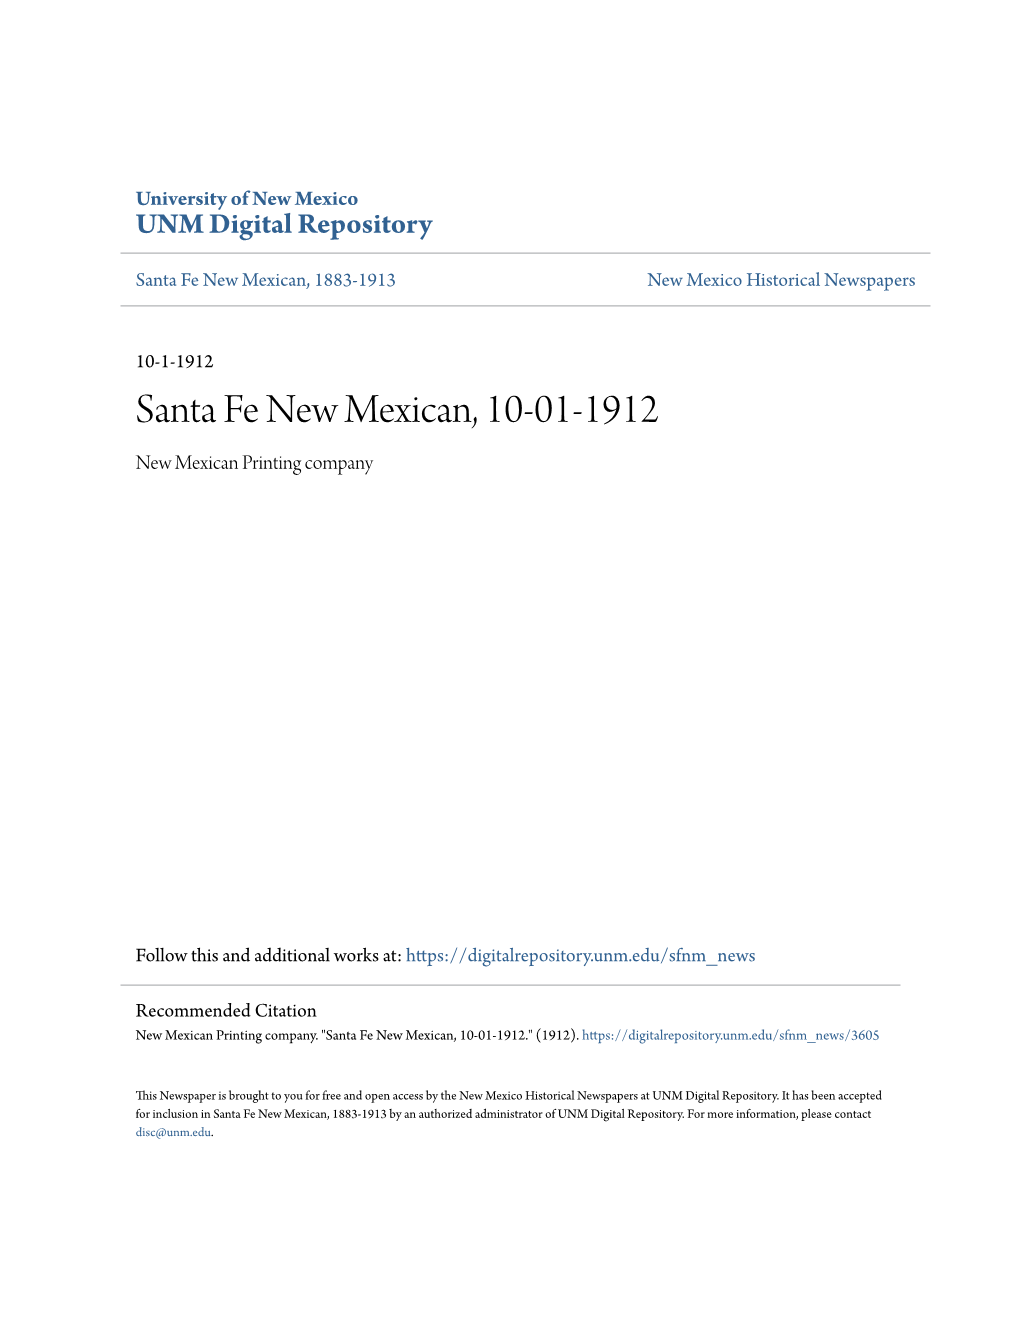 Santa Fe New Mexican, 10-01-1912 New Mexican Printing Company